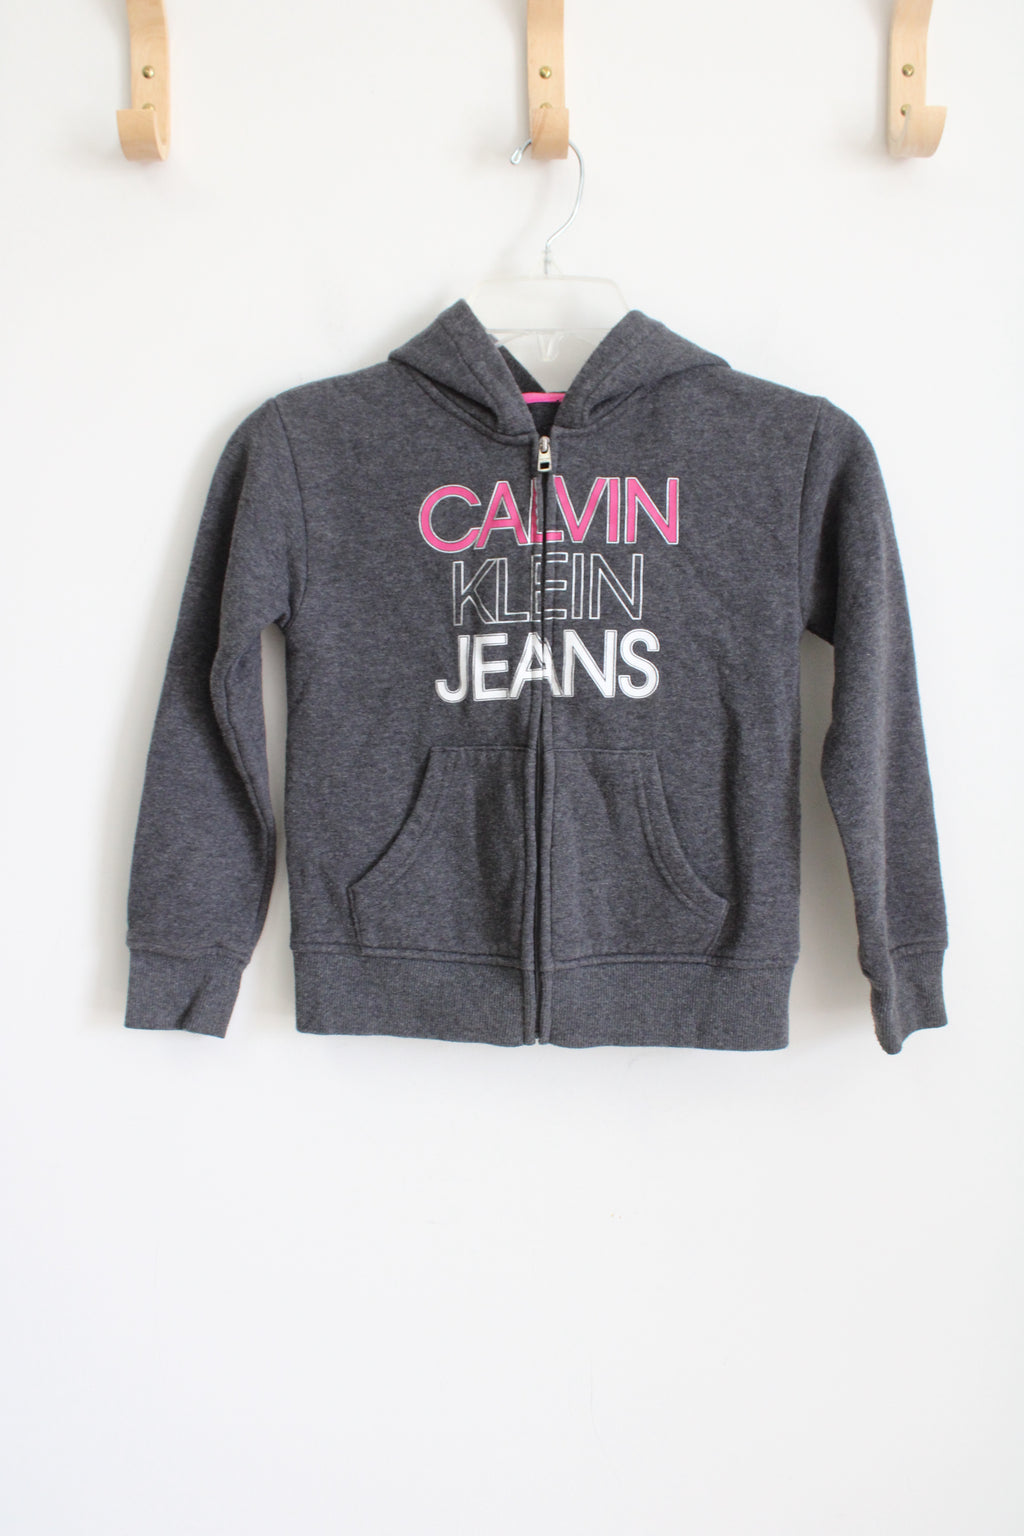 Calvin Klein Gray and Pink Full Zip Jacket | 8